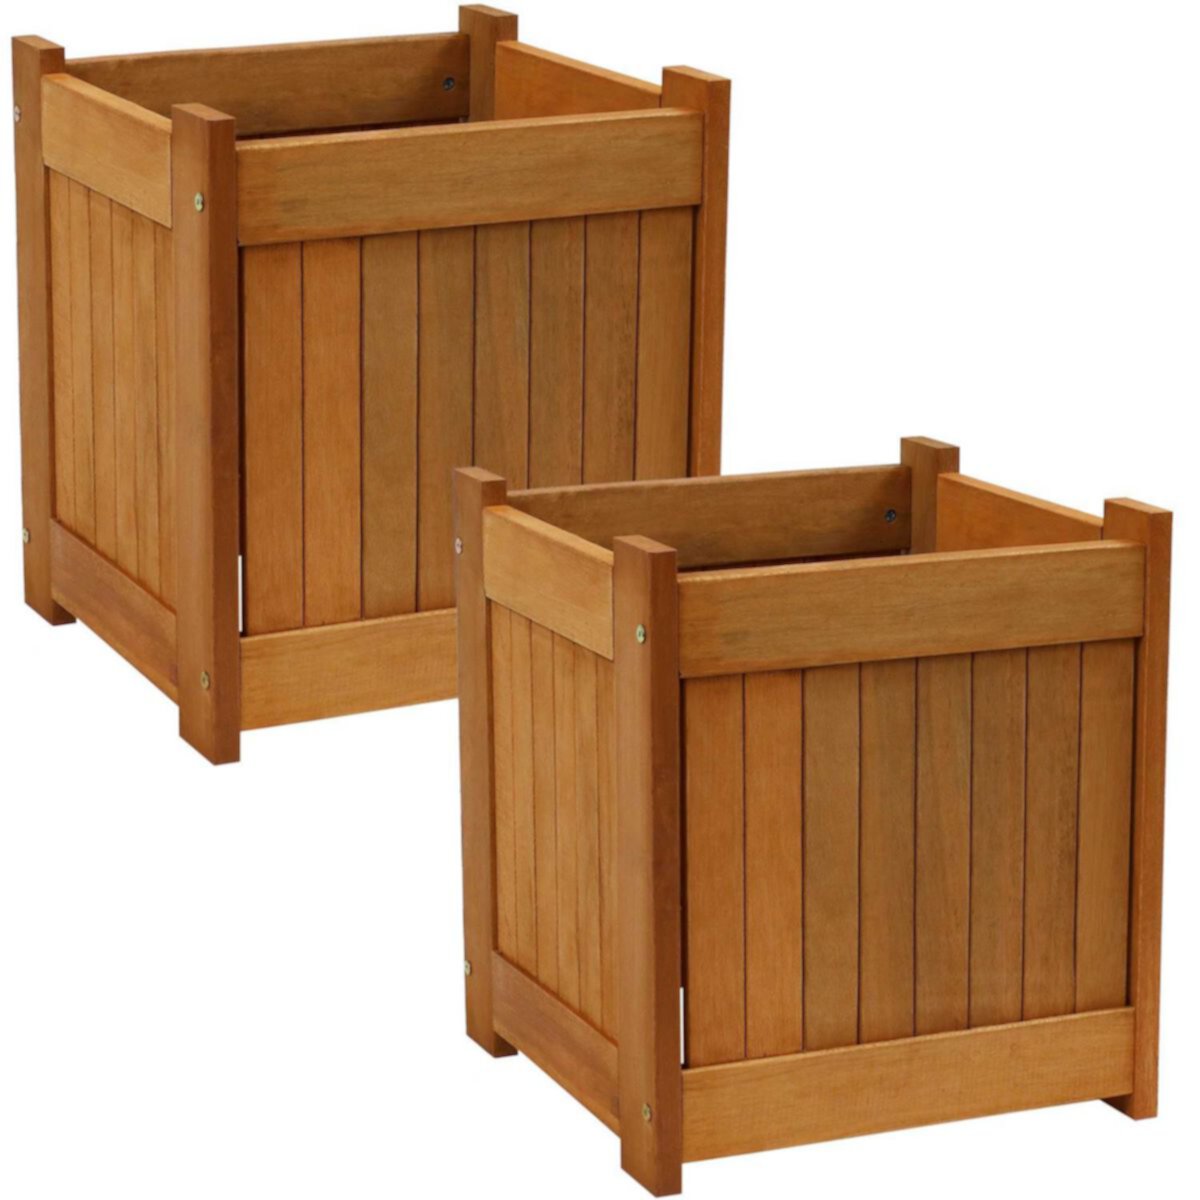 Sunnydaze Meranti Wood Outdoor Planter Box - 16-Inch  - Set of 2 Sunnydaze Decor